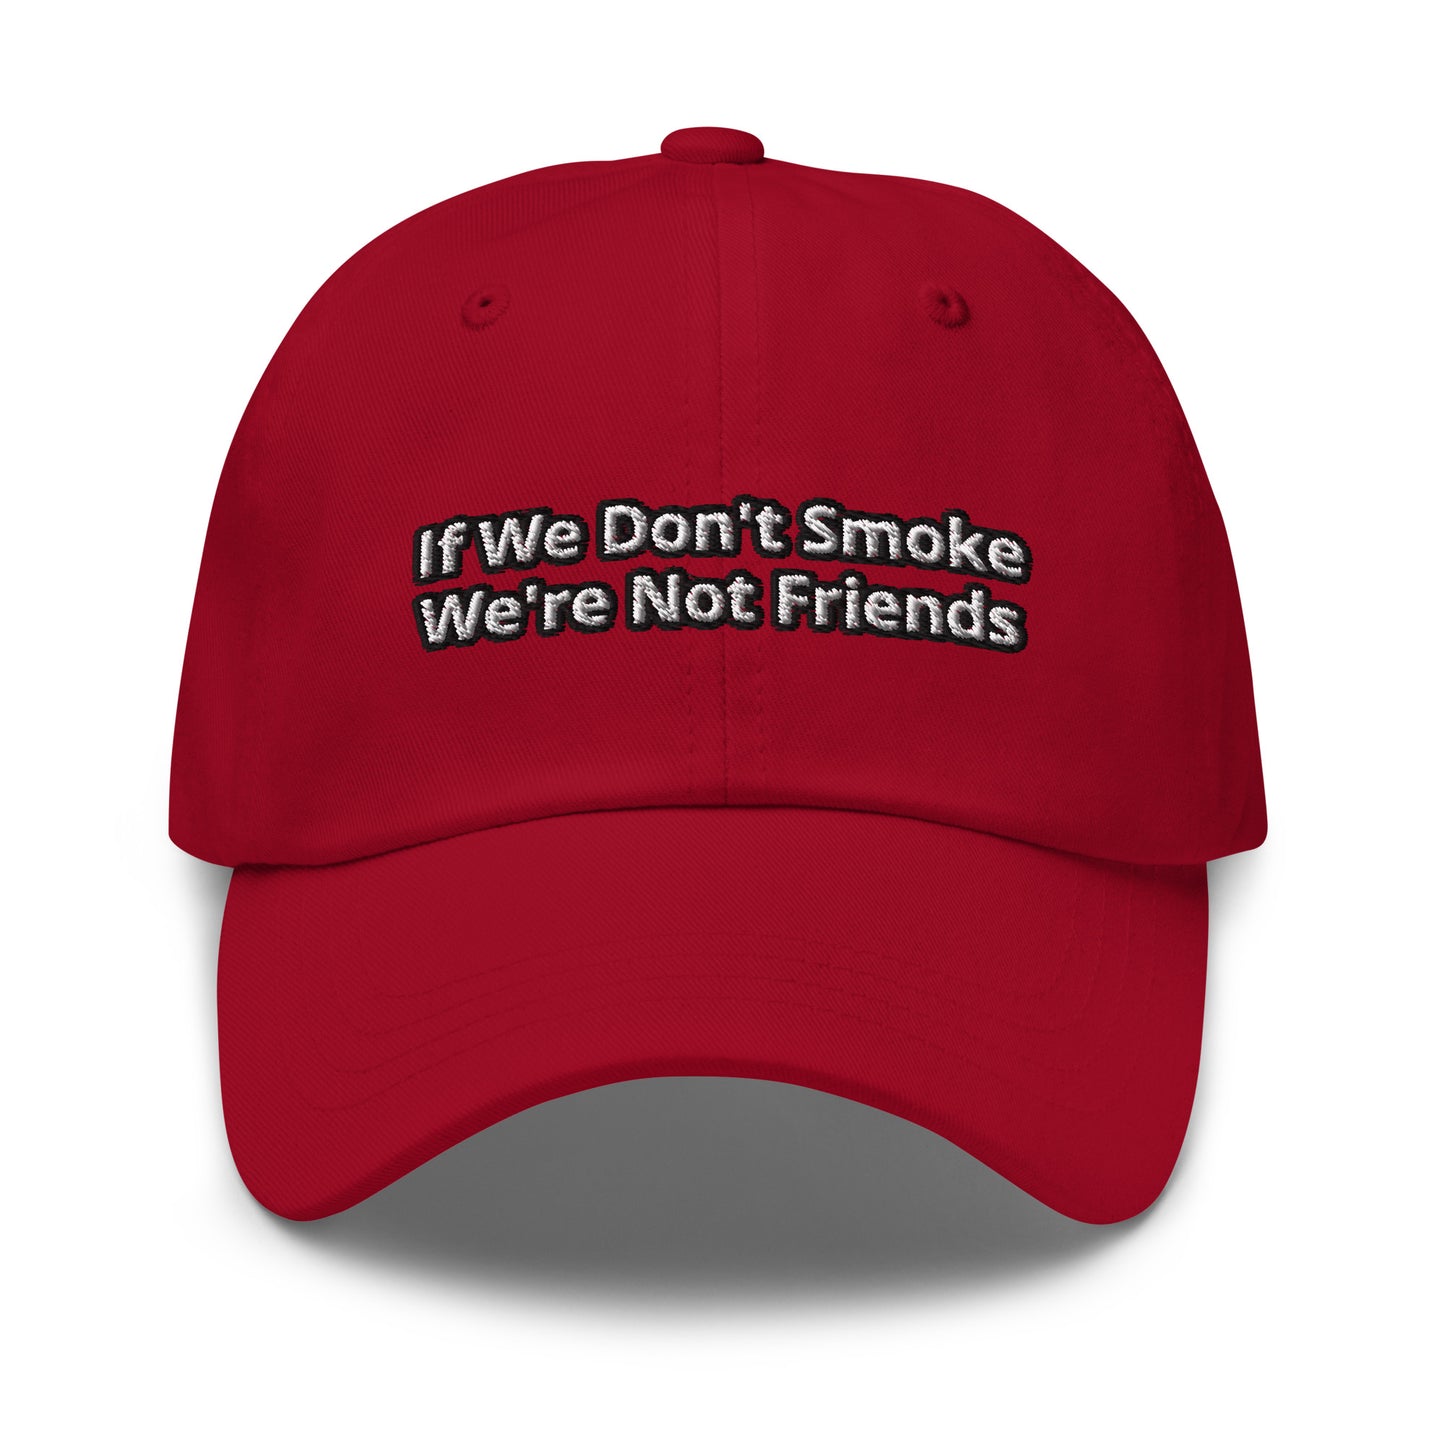 Not Friends Dad hat